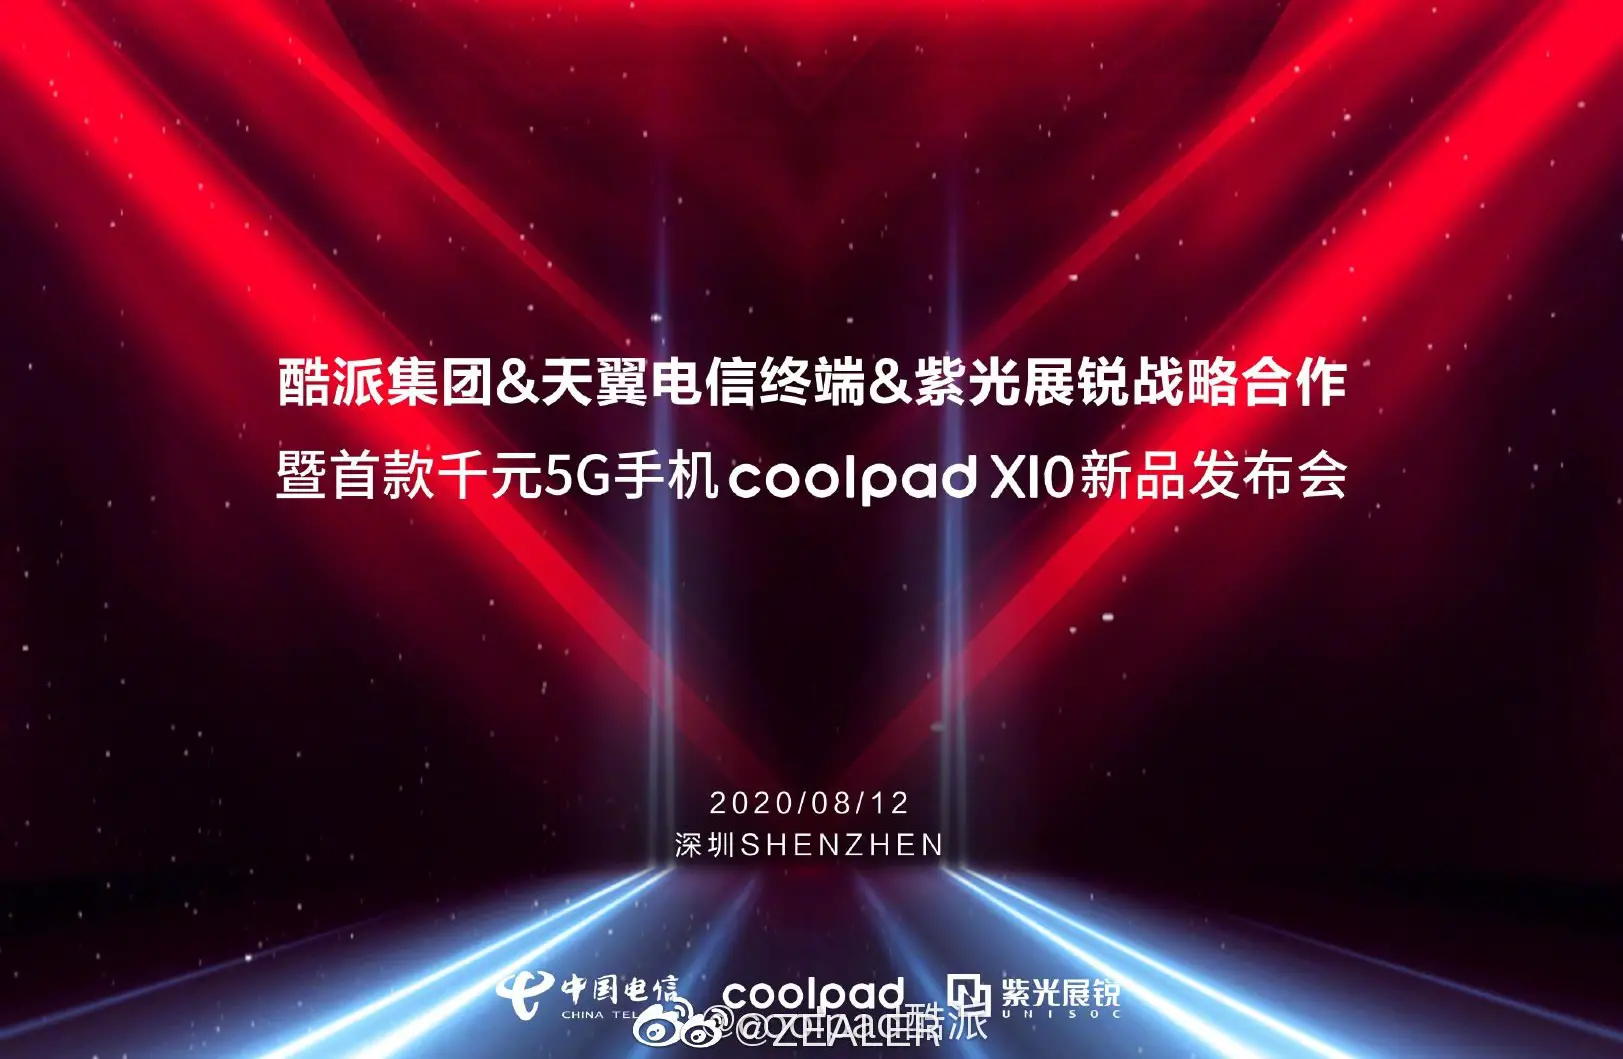 Coolpad X10